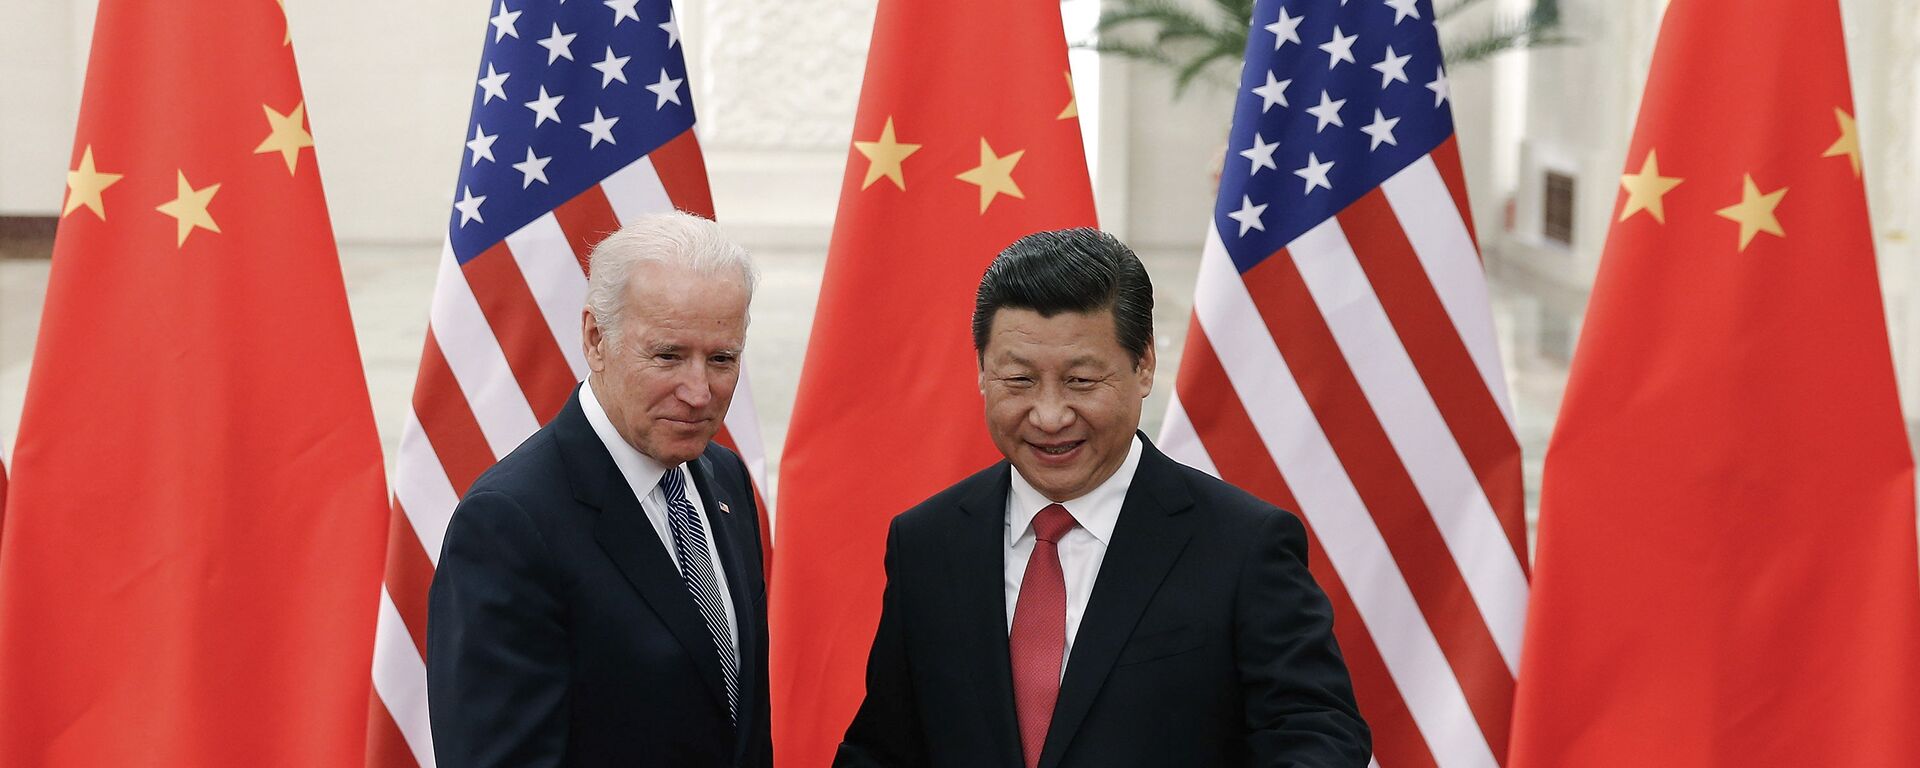 El presidente chino, Xi Jinping con su homólogo de EEUU, Joe Biden - Sputnik Mundo, 1920, 16.06.2021